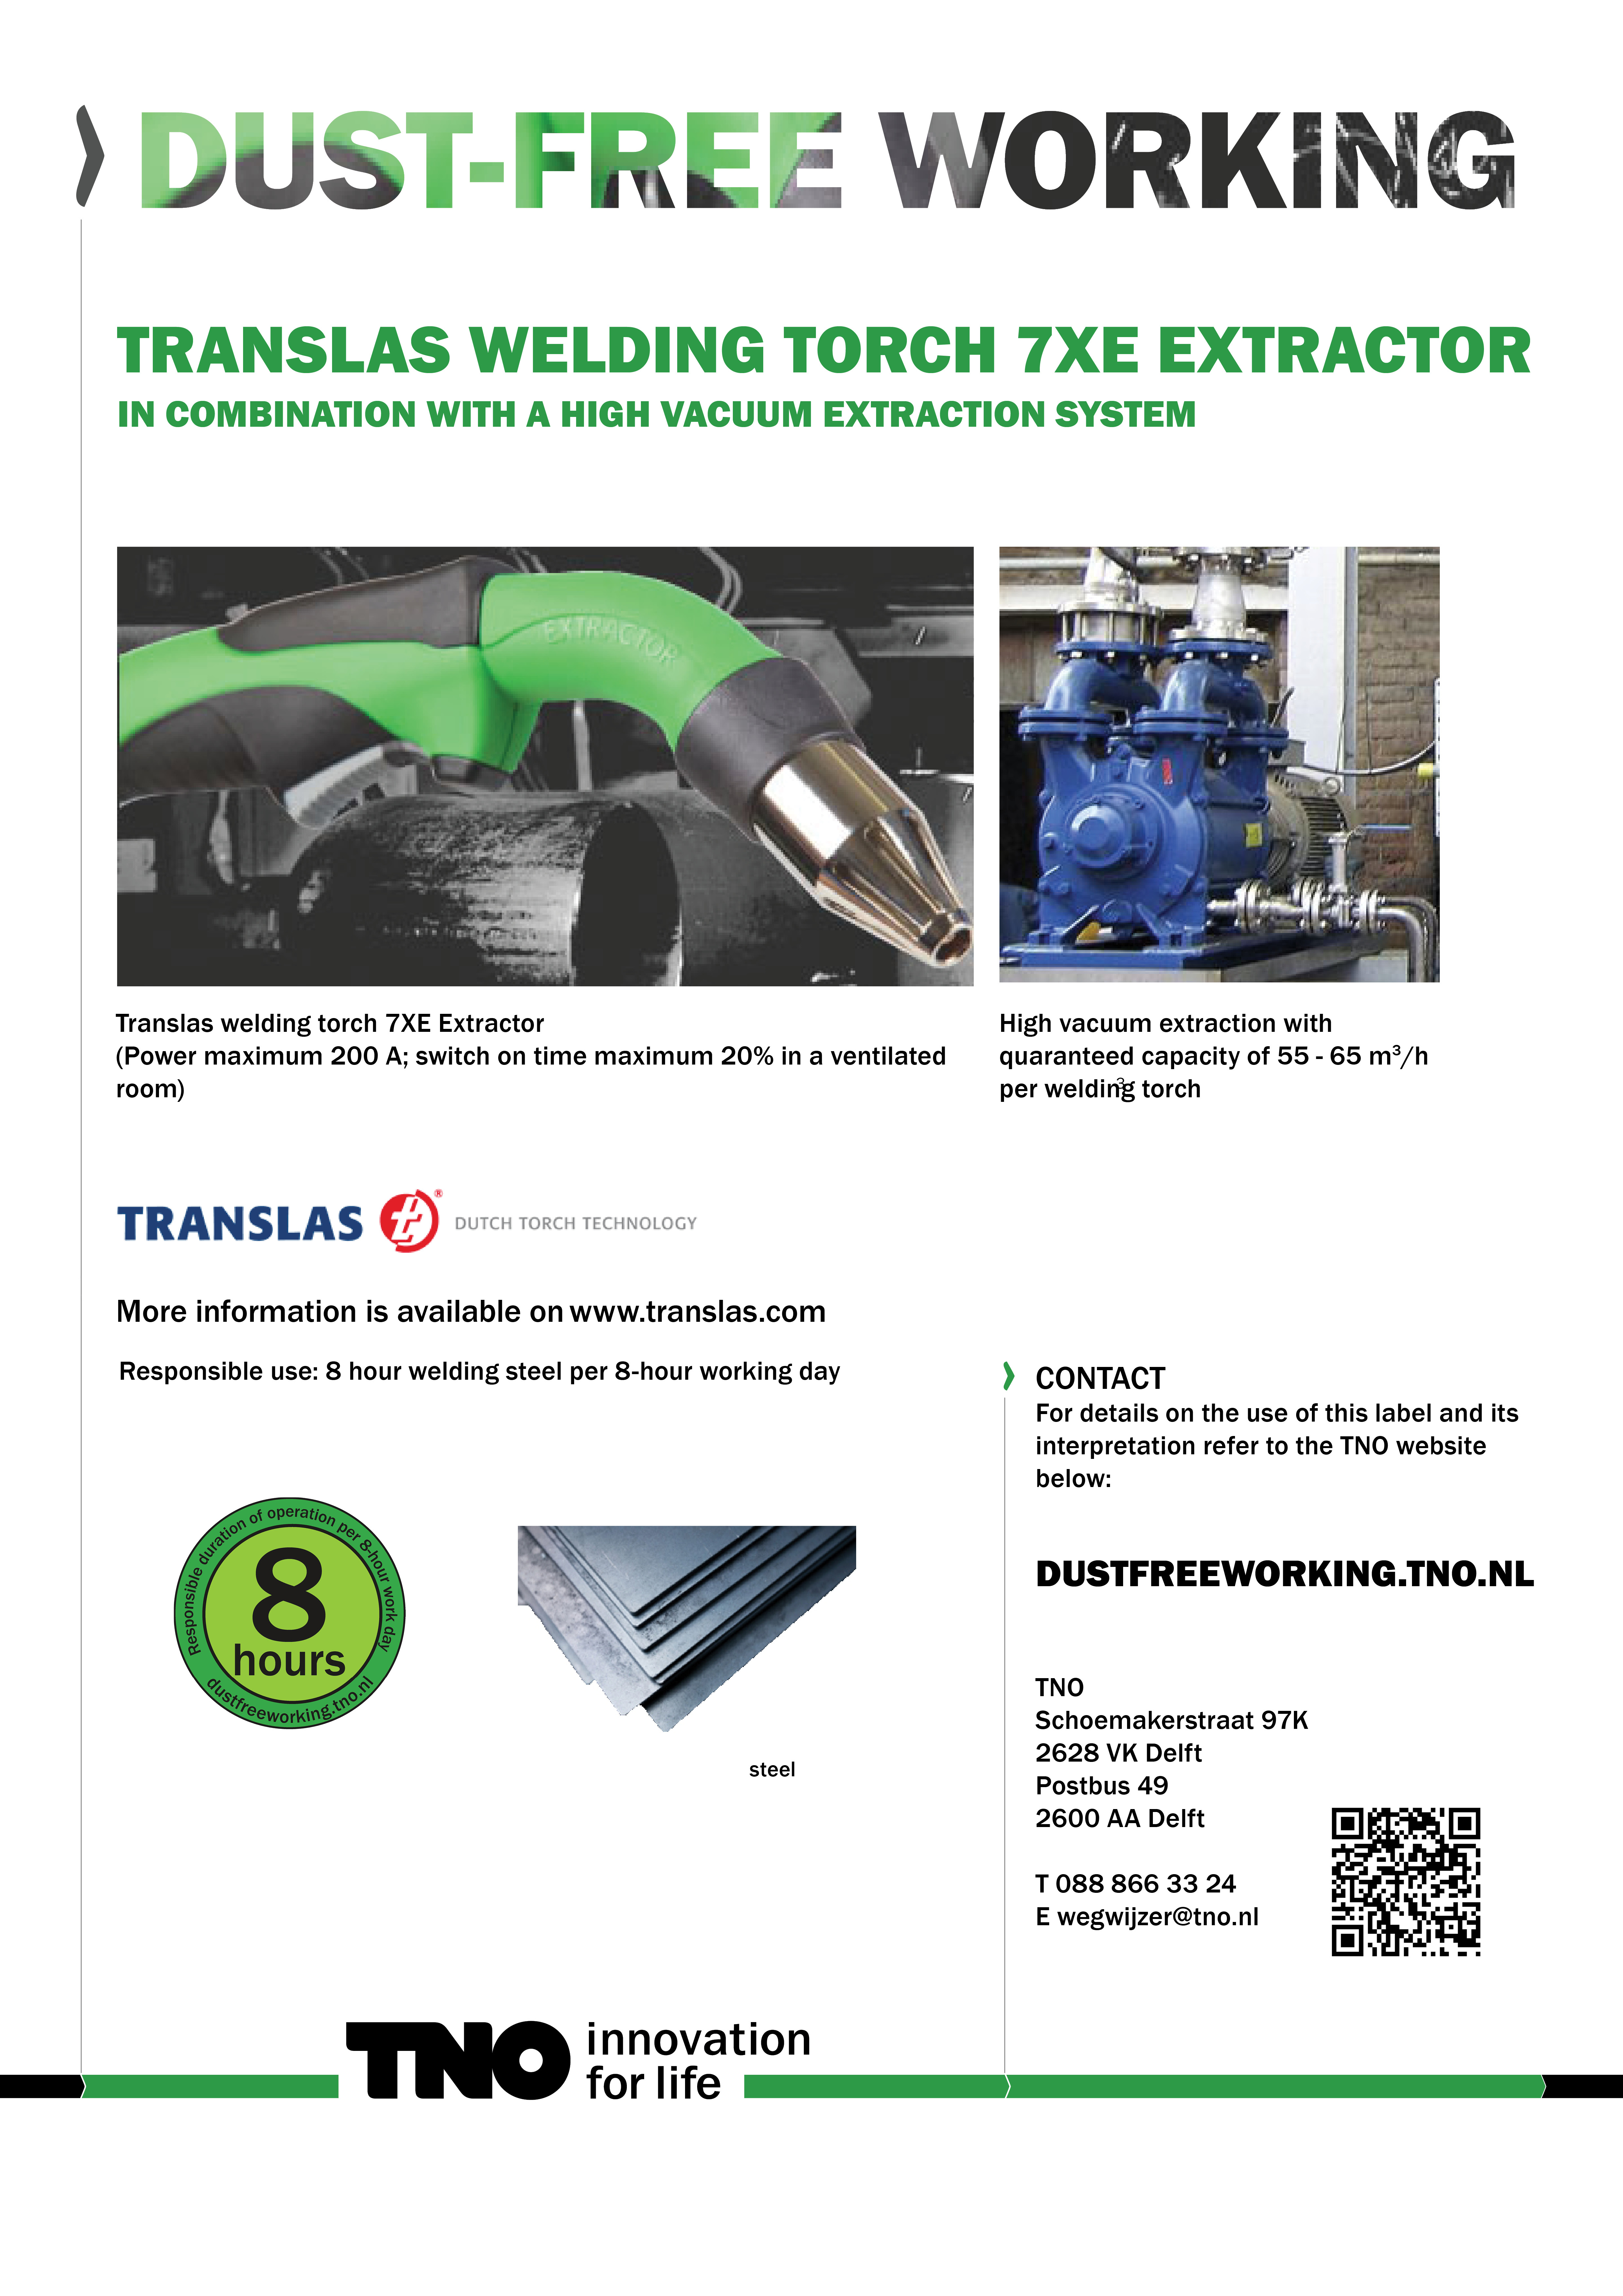 Translas lastoorts 7XE Extractor met hoogvacuum afzuigsysteem